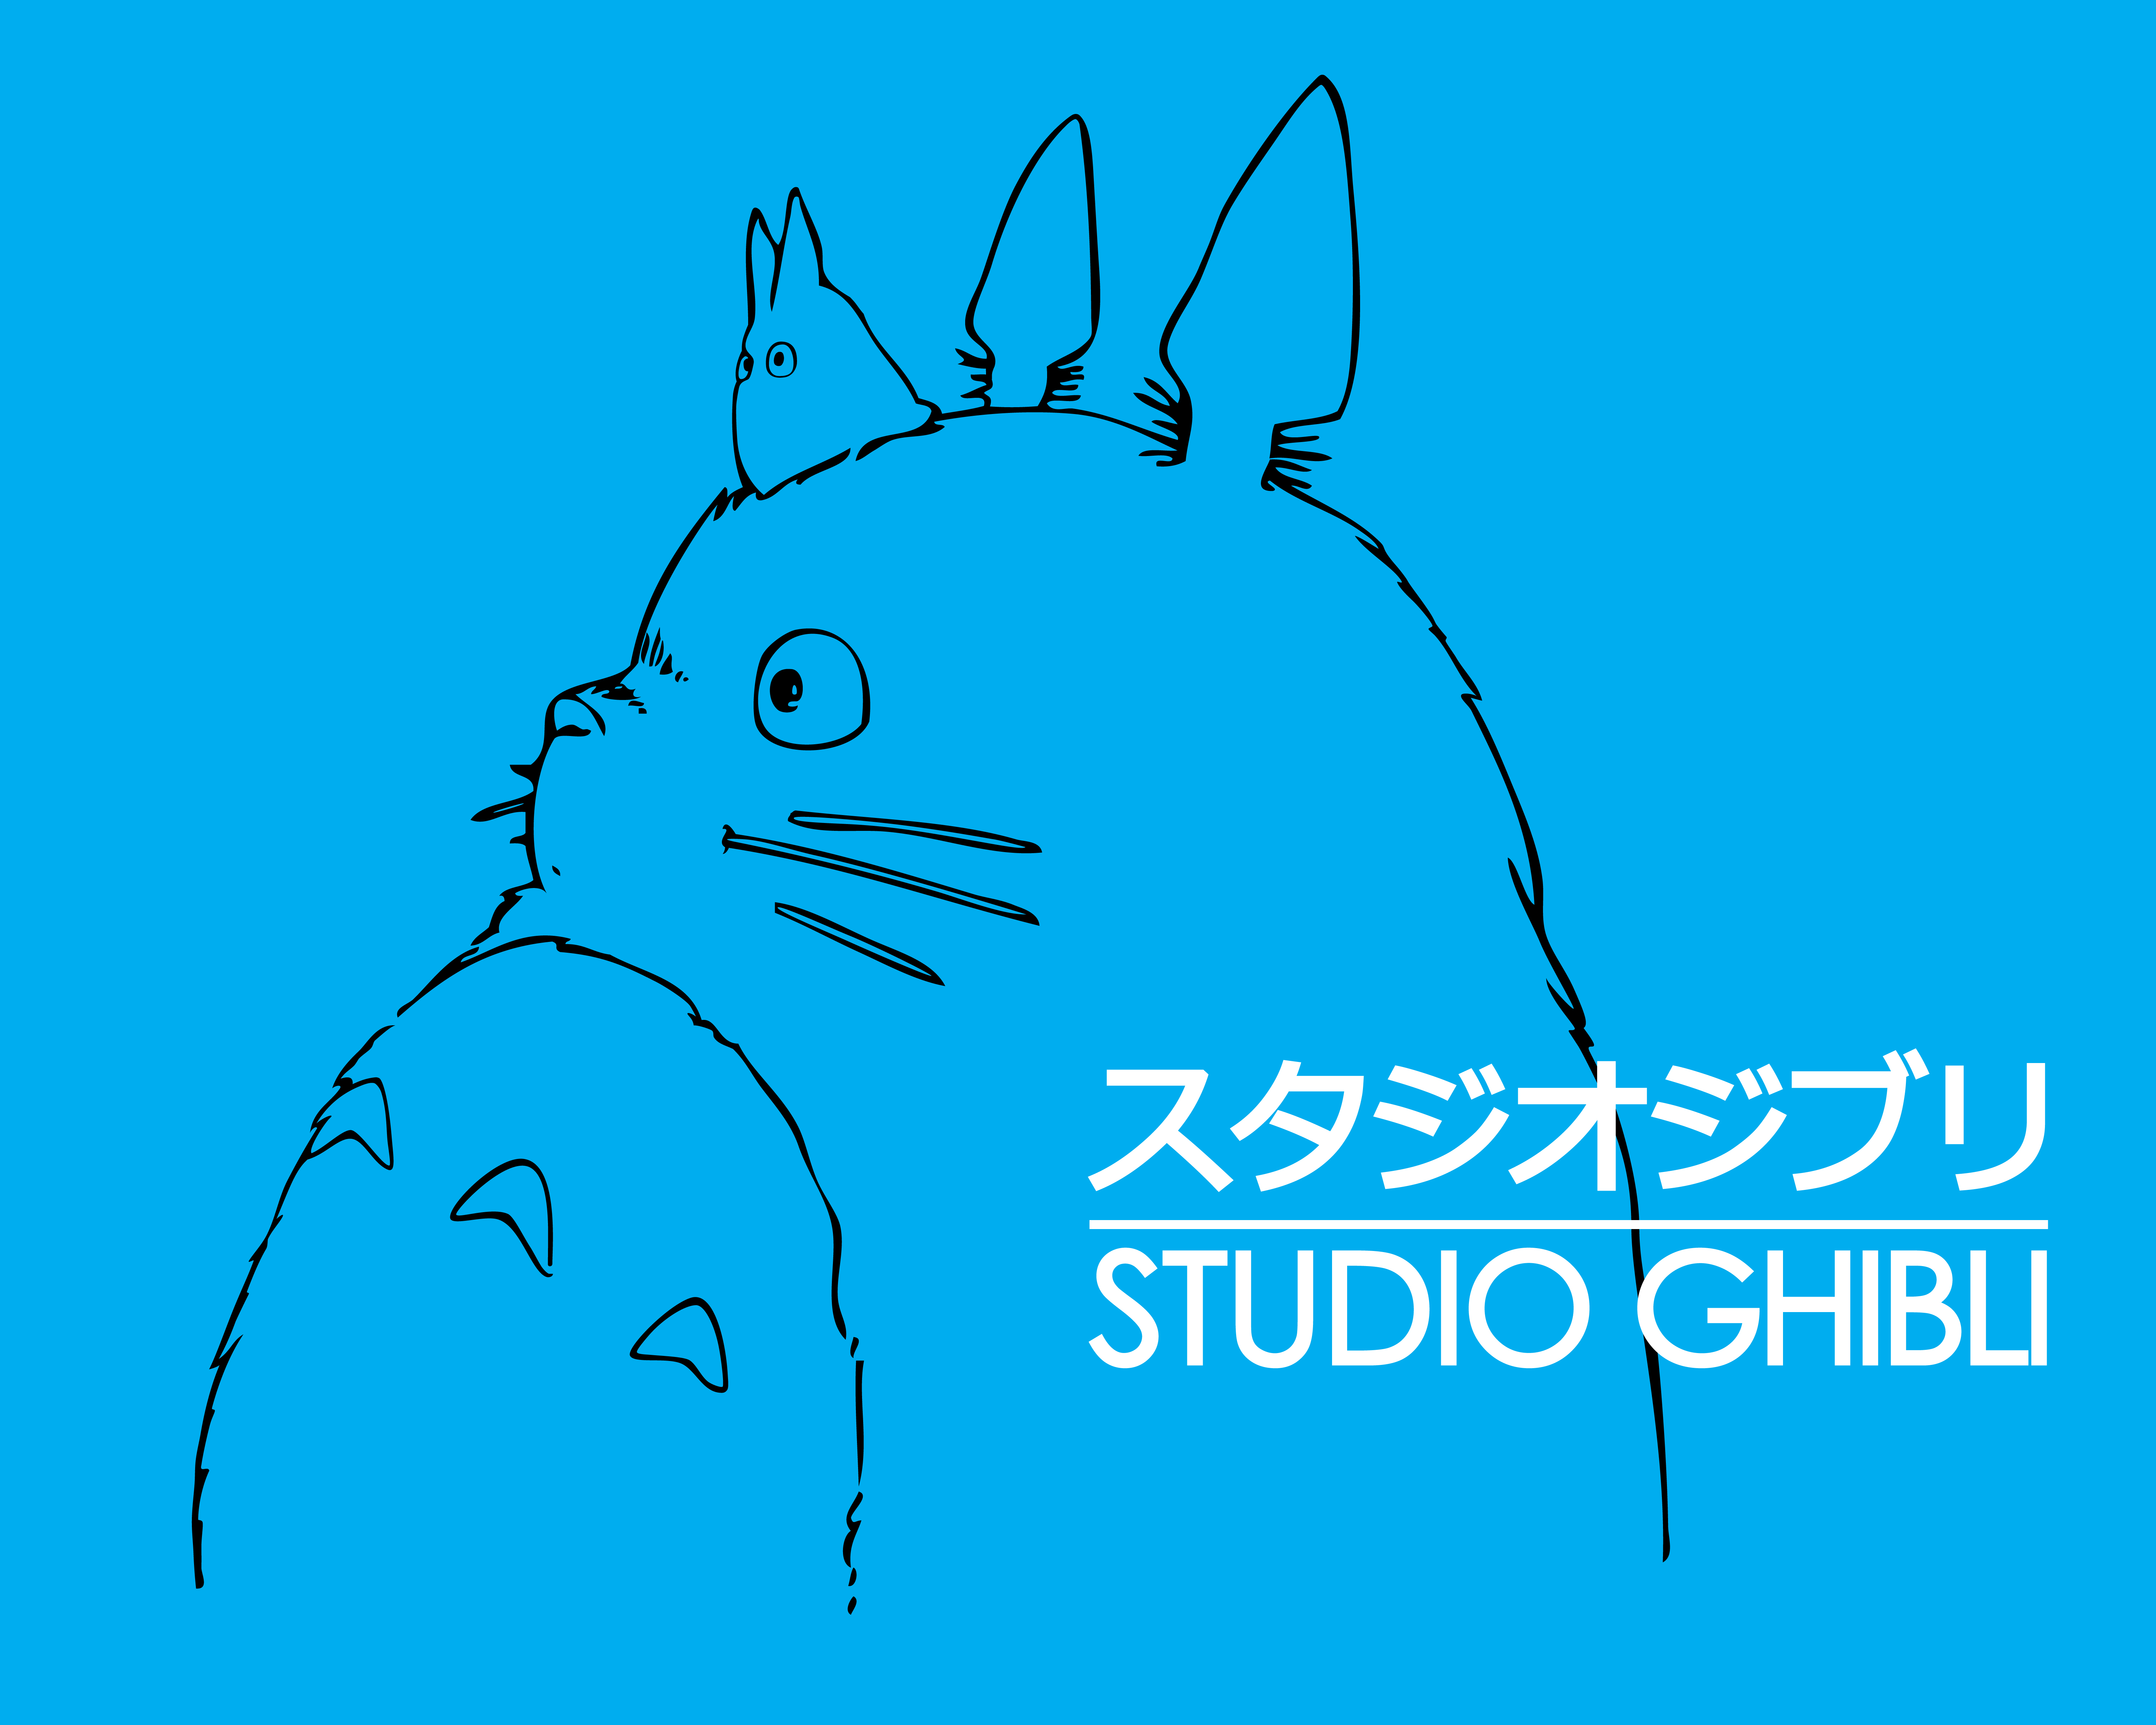 studio ghibli logo with totoro